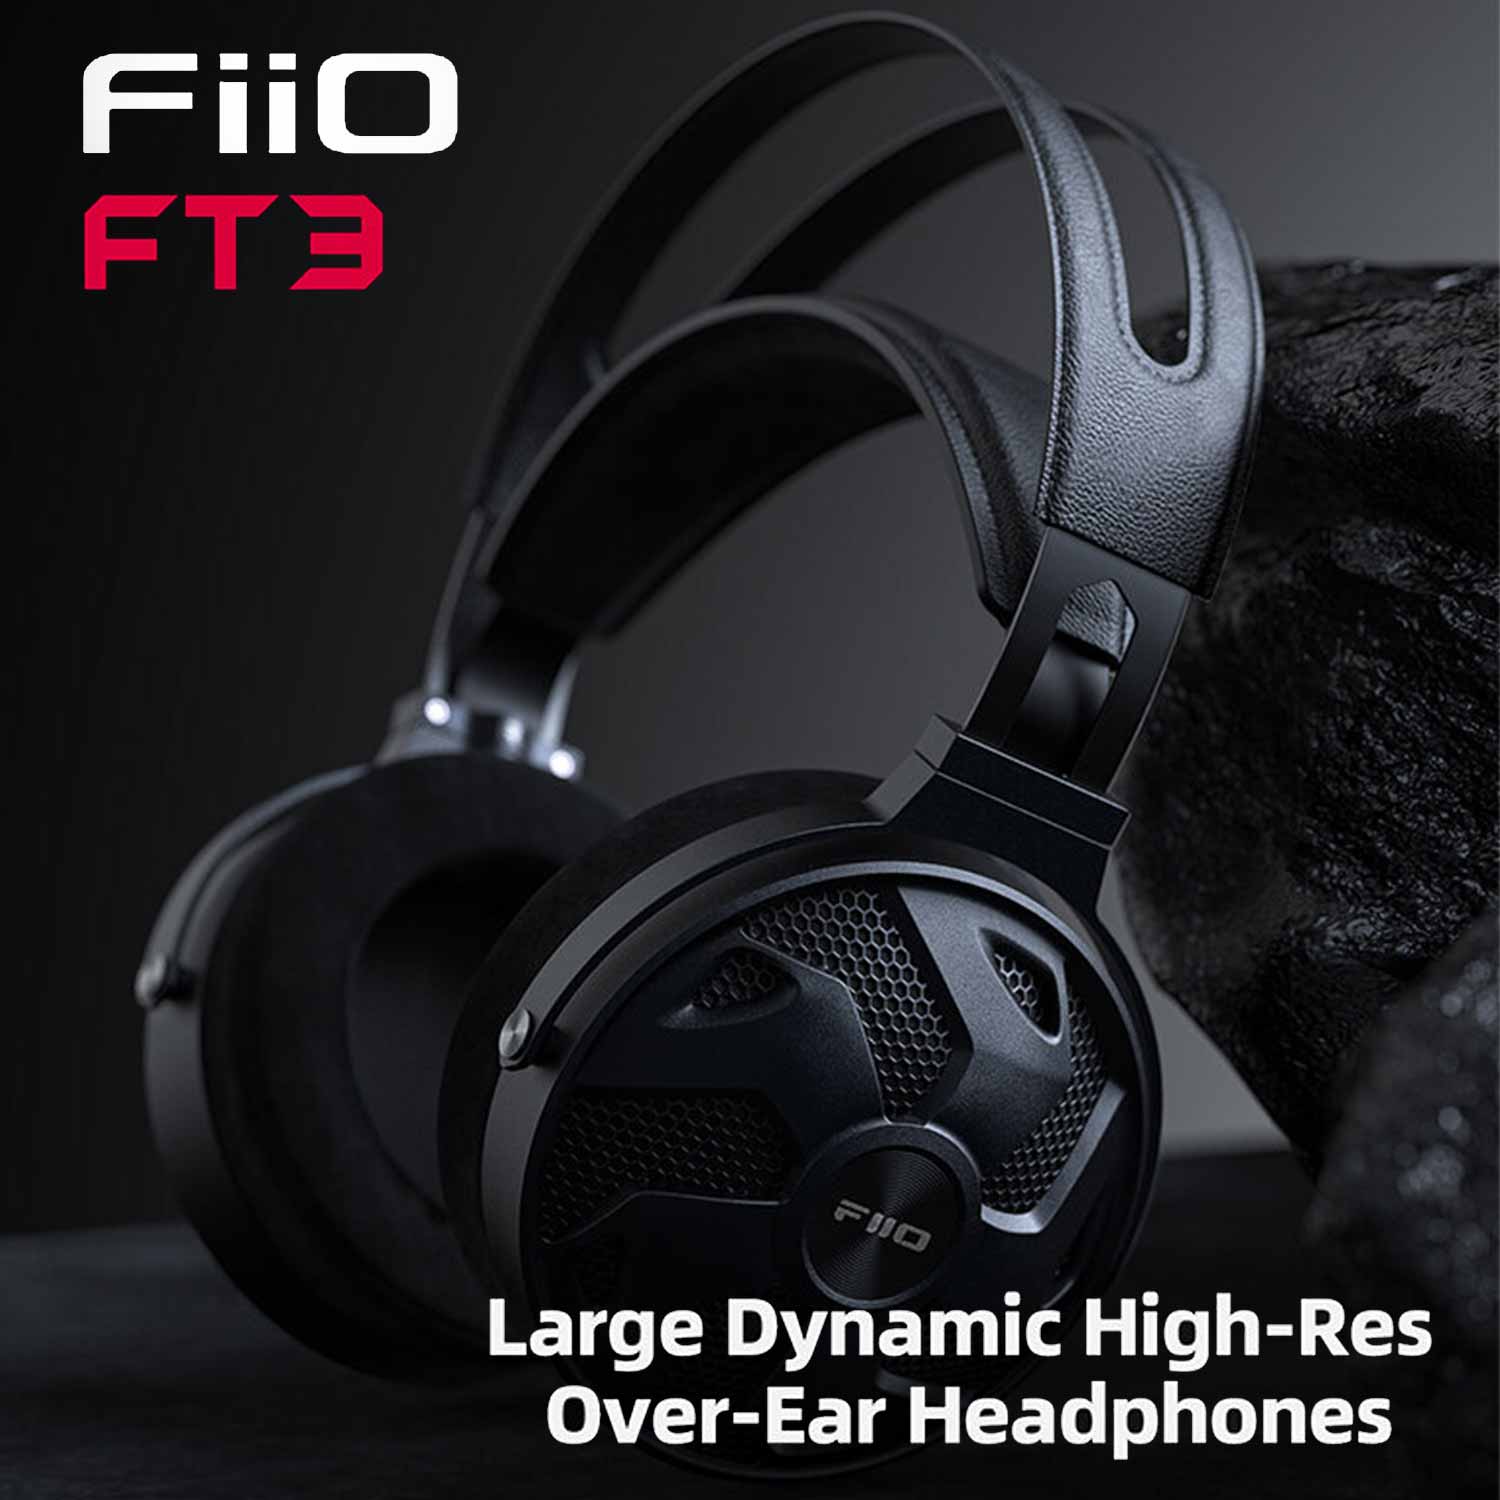 fiio ft3 headphones